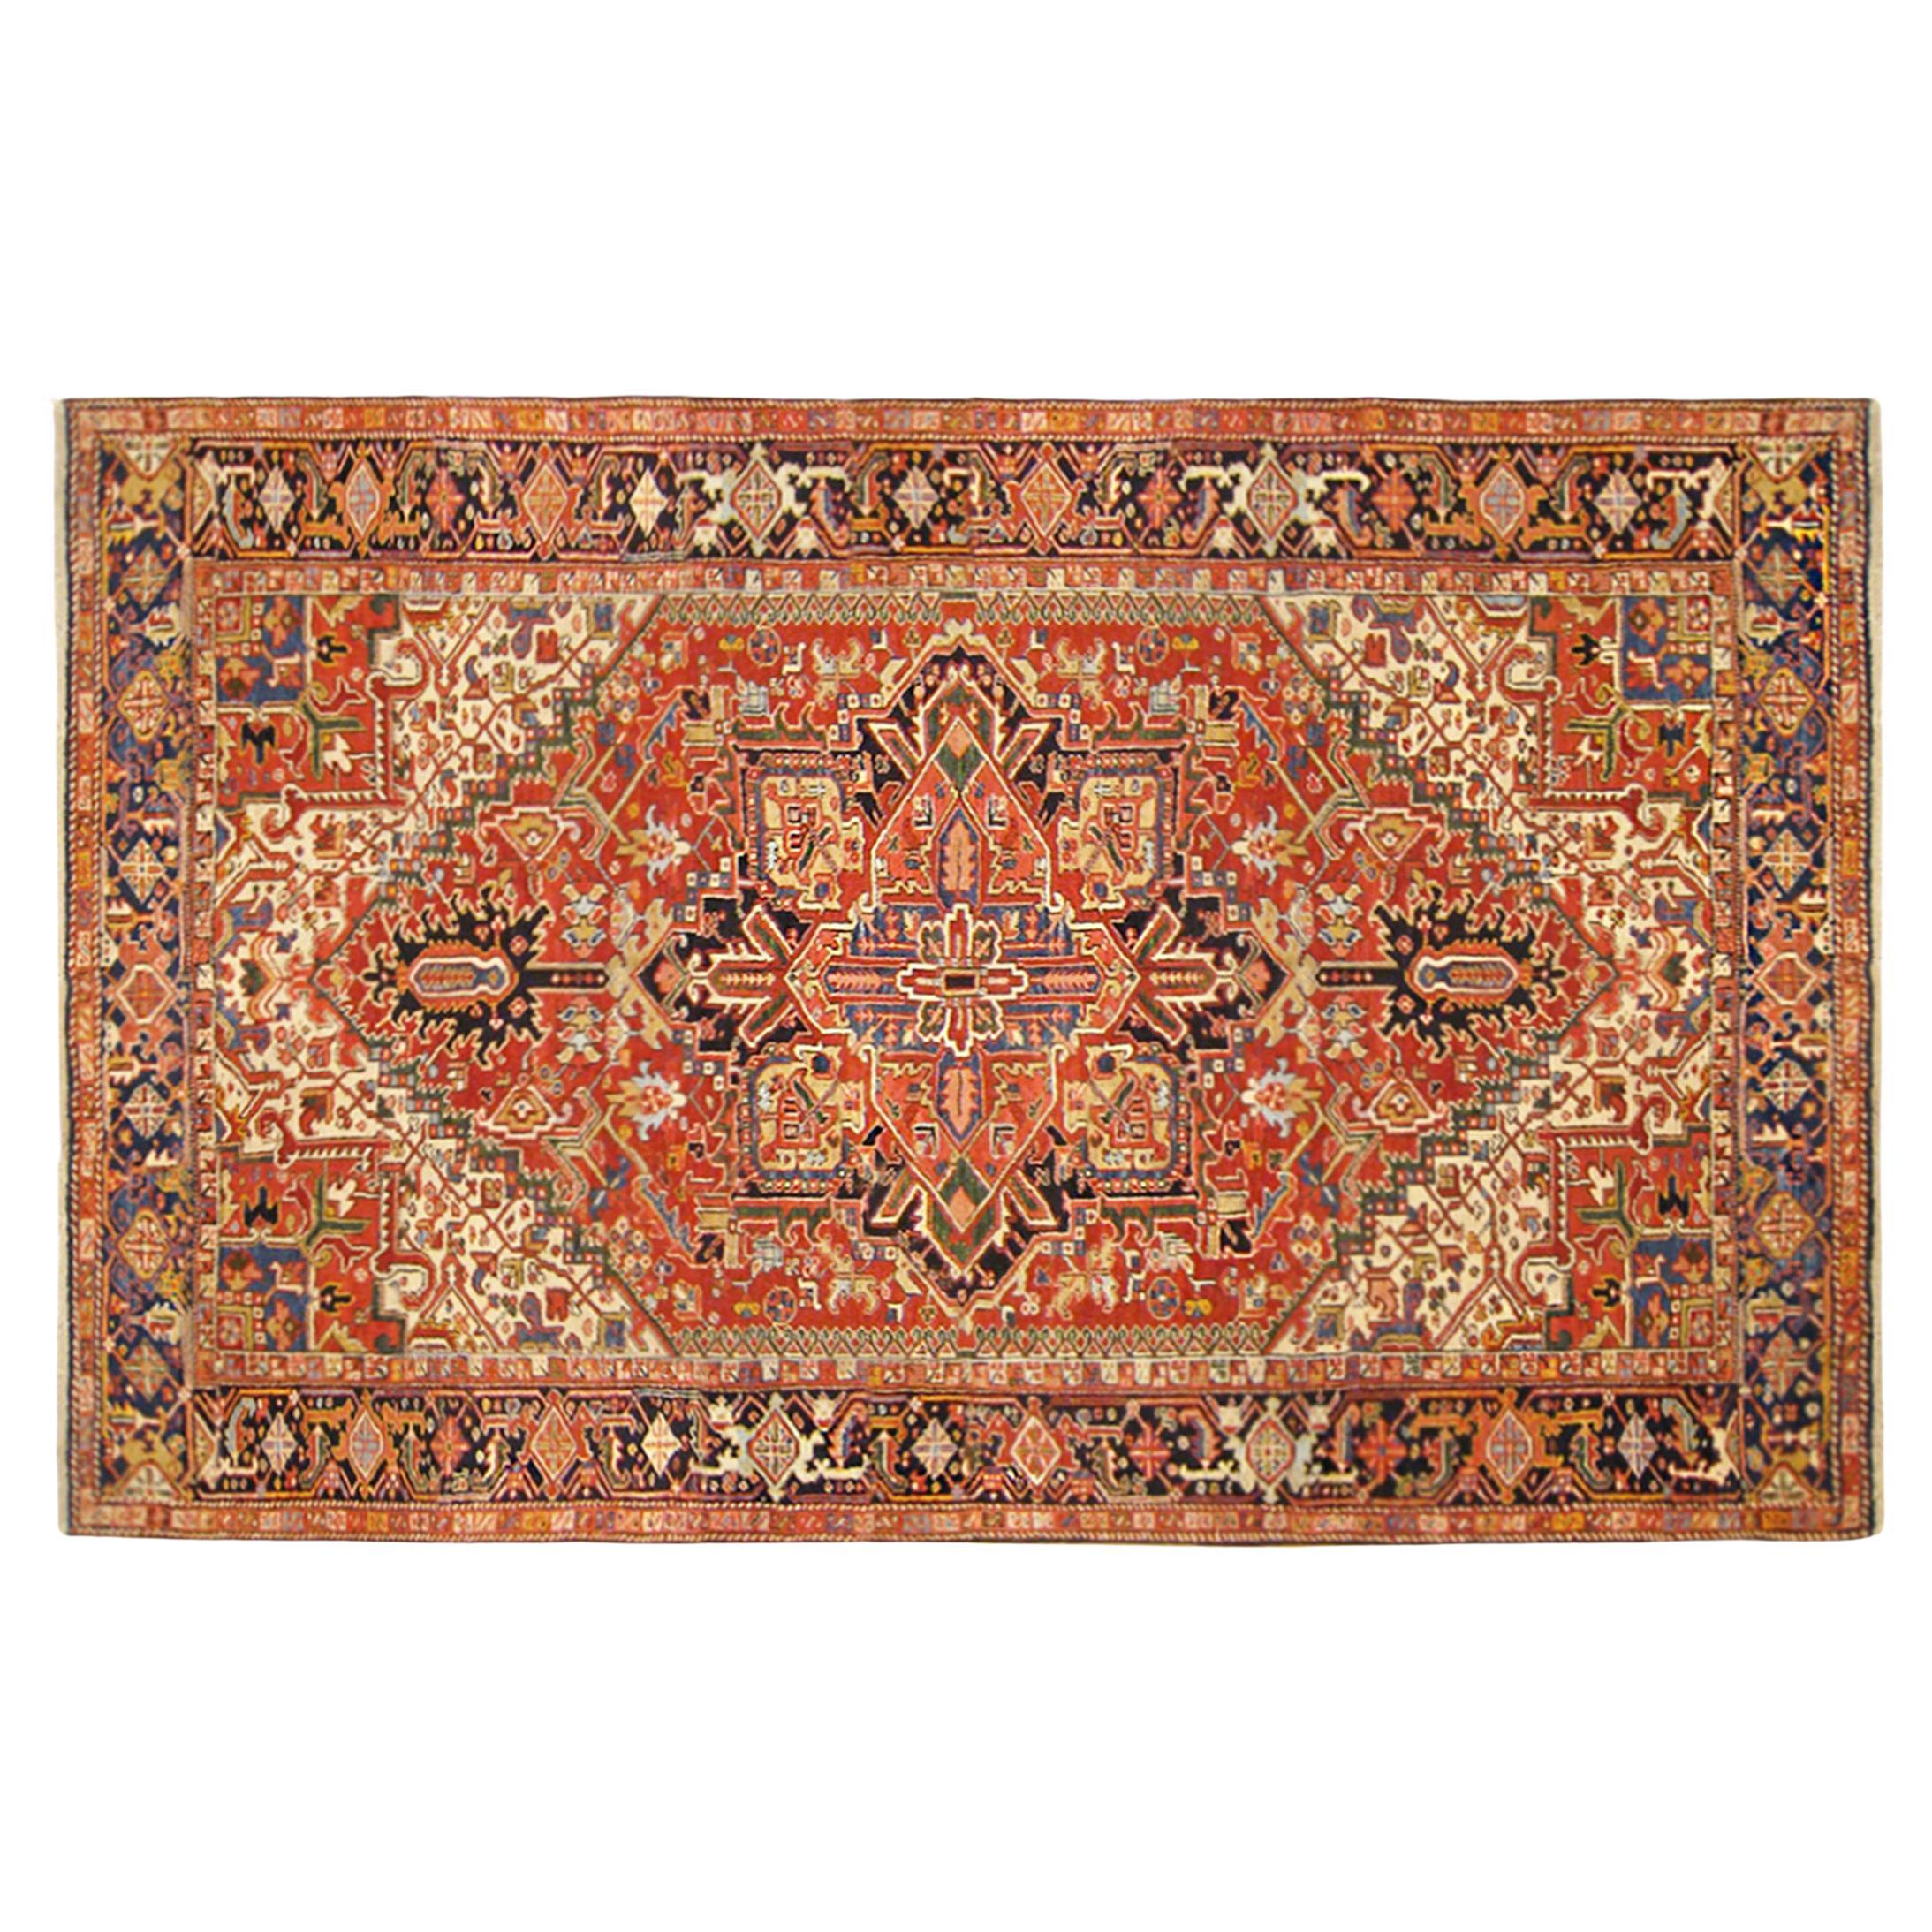  Antique Persian Decorative Oriental Heriz Rug in Room Size For Sale